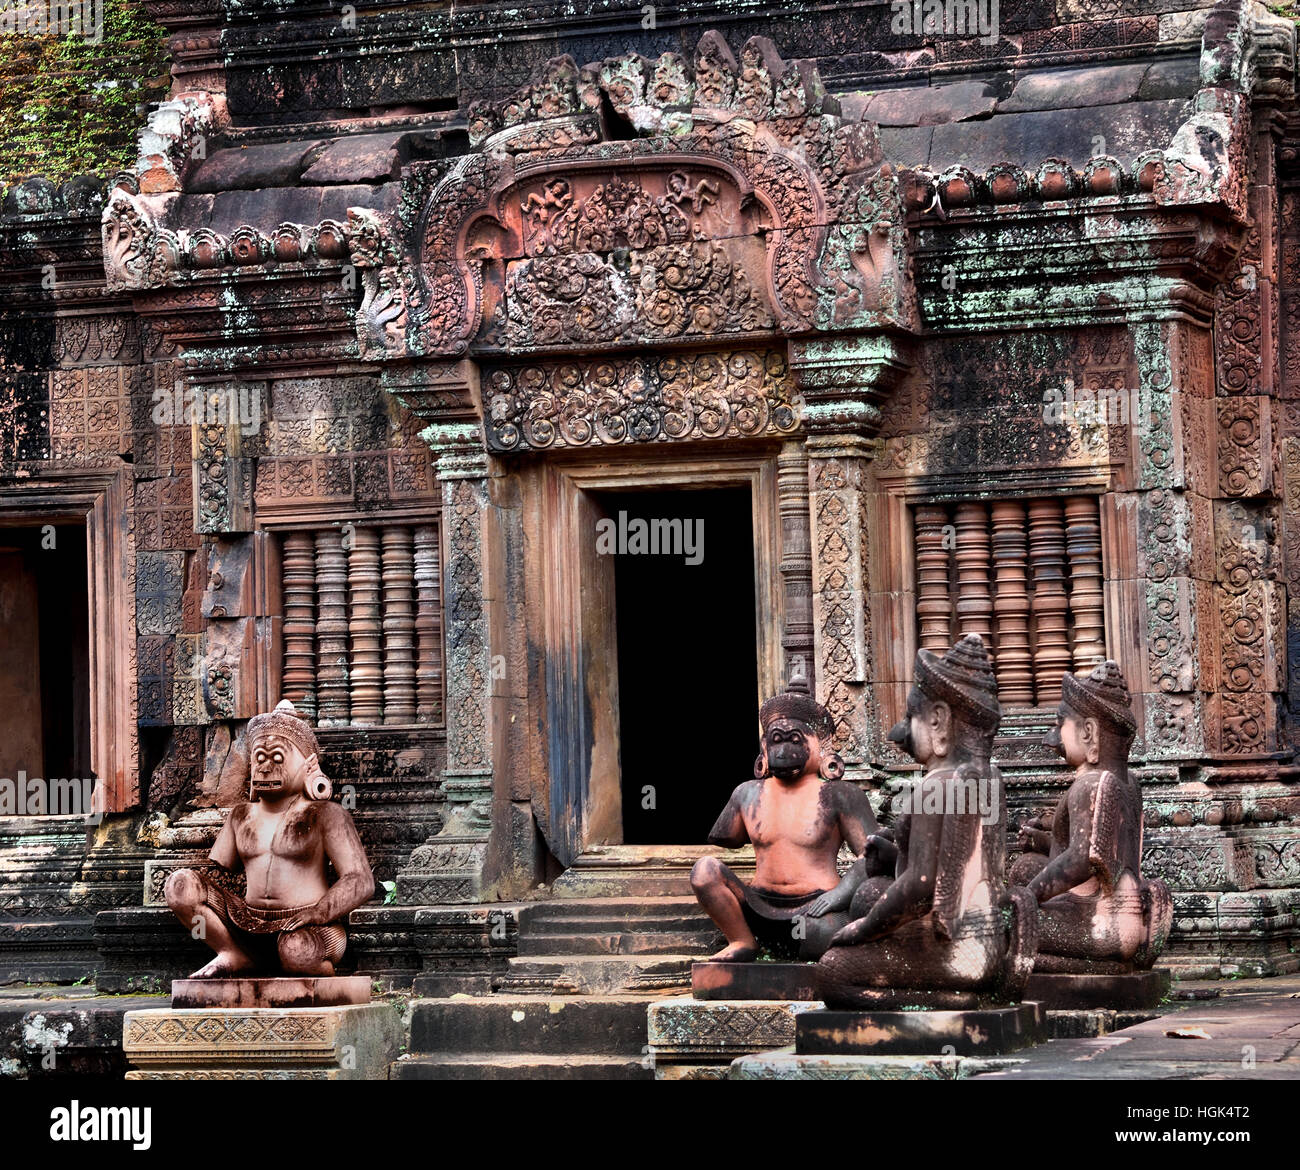 Banteay Srei - Srey kambodschanischen Tempel 10. Jahrhundert Hindu-Tempel Shiva geweiht. Siem Reap, Kambodscha (Angkor Komplex verschiedene archäologische Hauptstädte Khmer Reich 9-15. Jahrhundert) Stockfoto